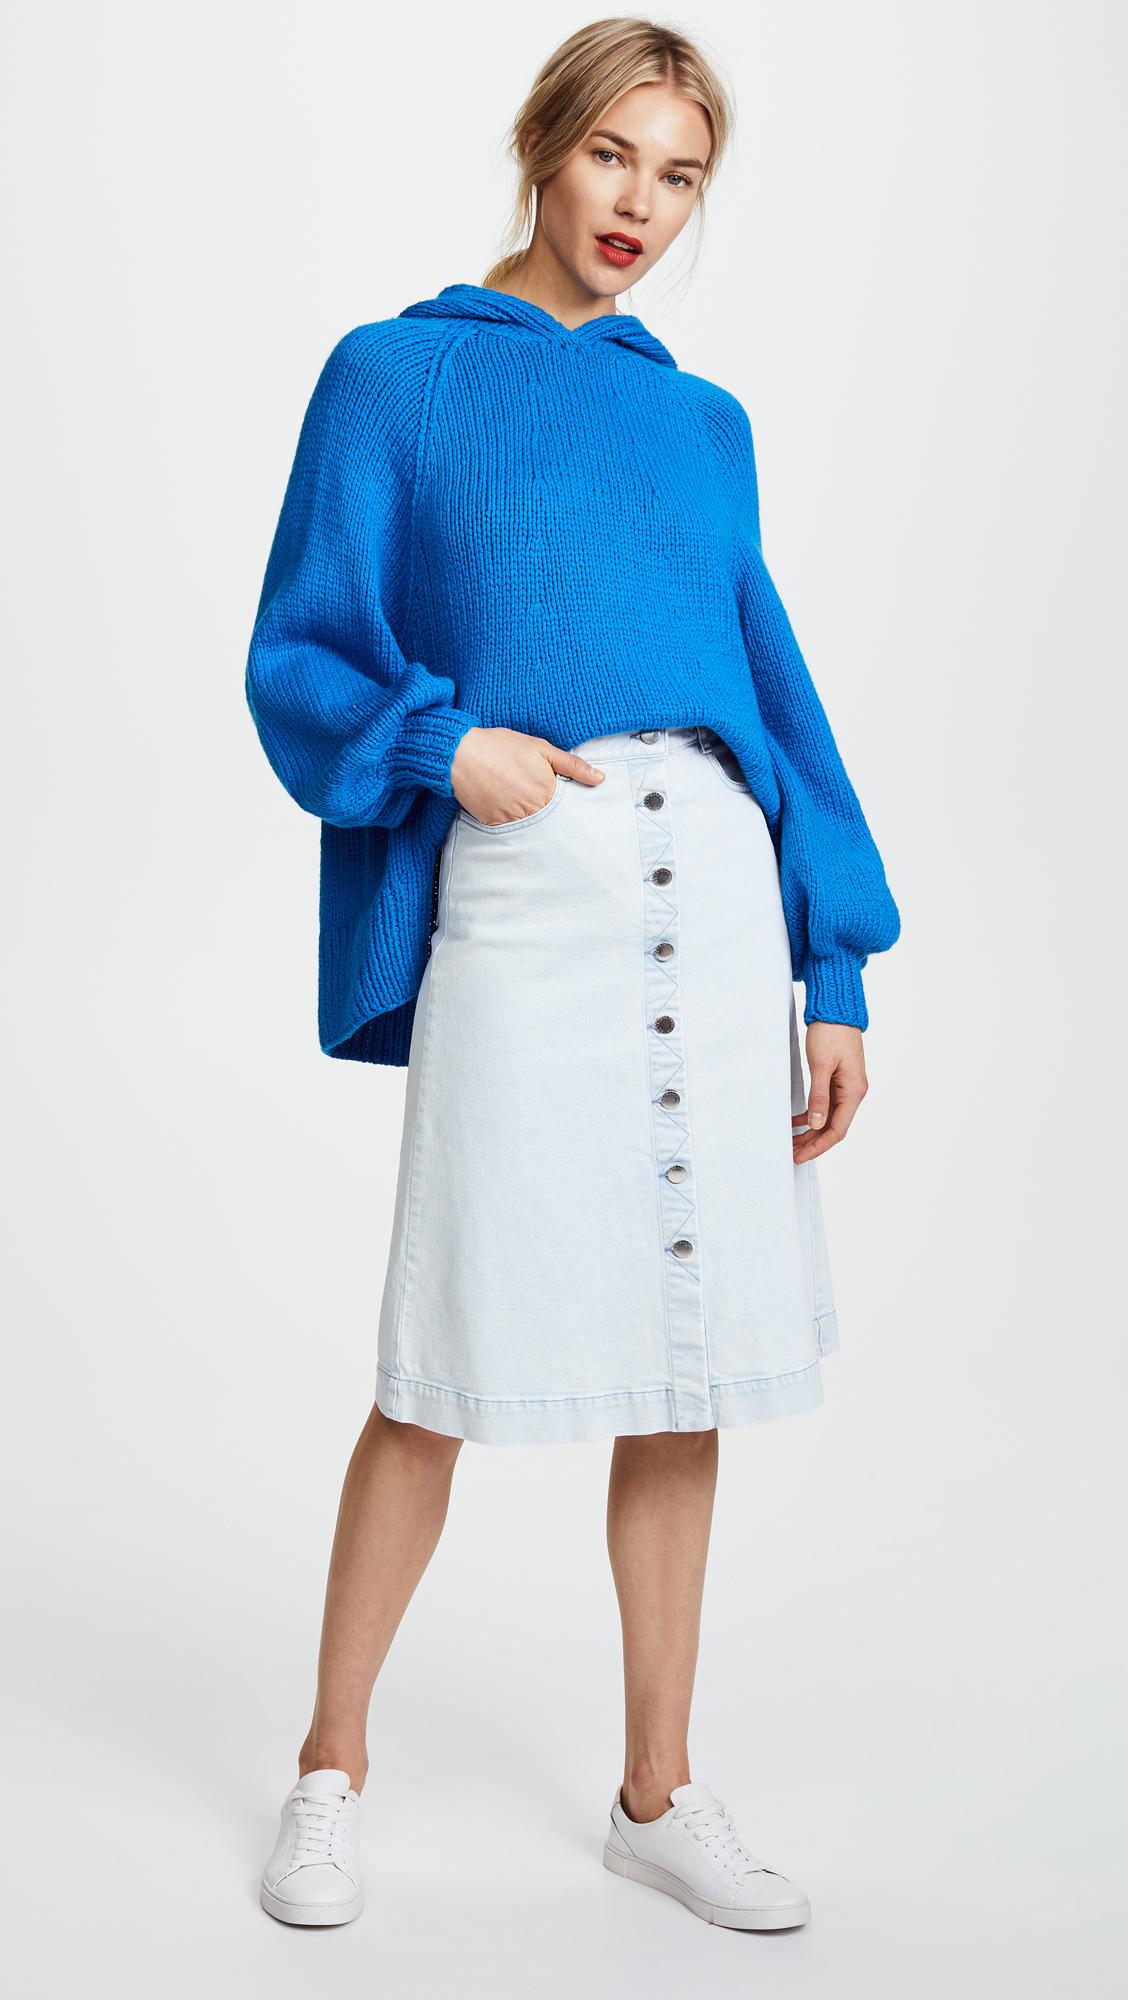 Stella McCartney Sylvia Denim Skirt in Blue Denim (Blue) - Lyst